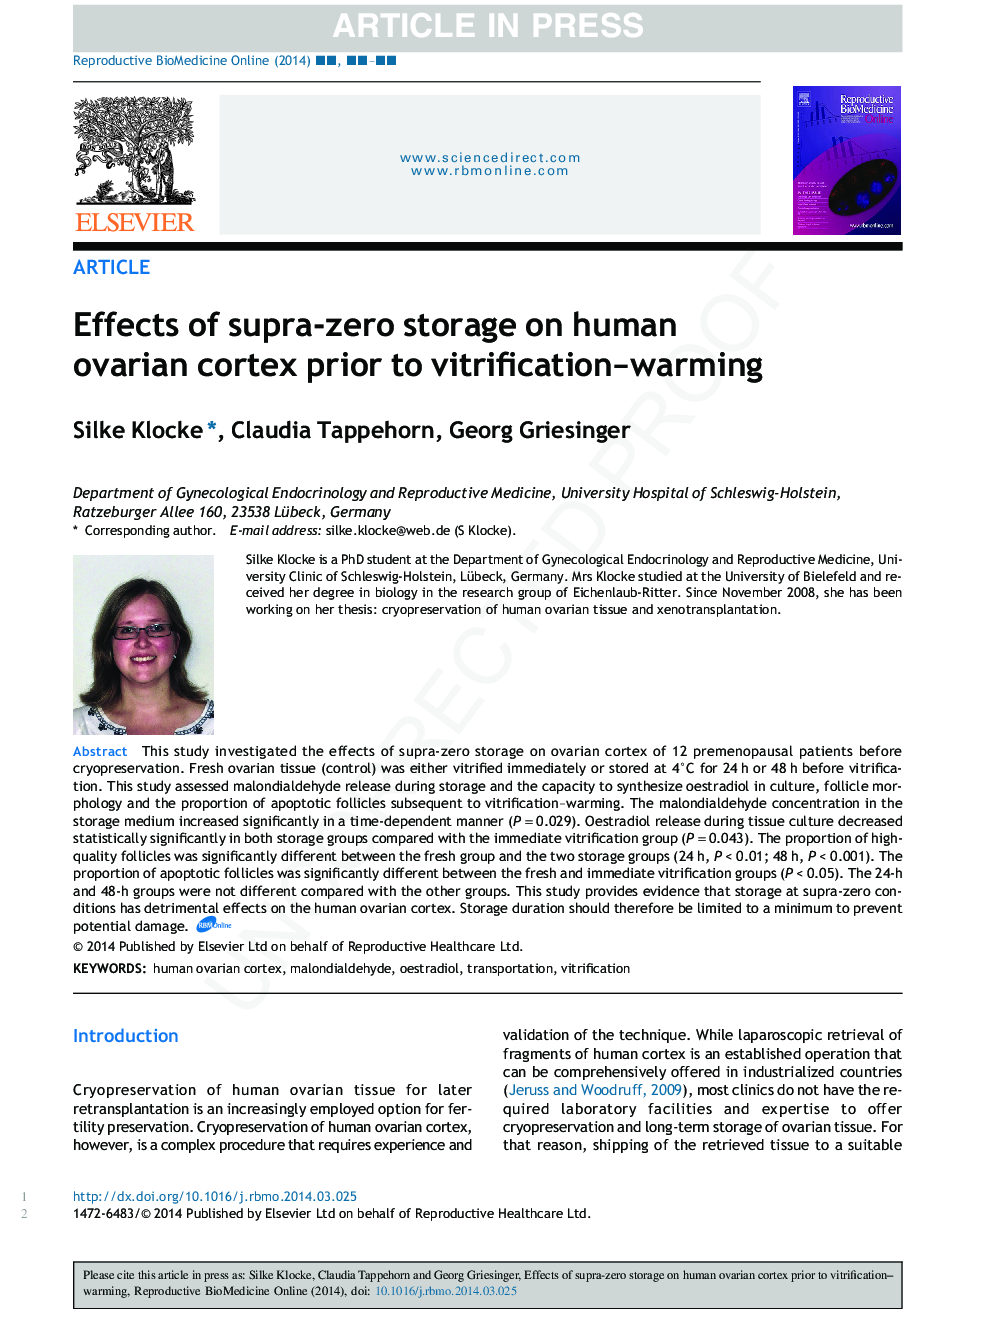 Effects of supra-zero storage on human ovarian cortex prior to vitrification-warming